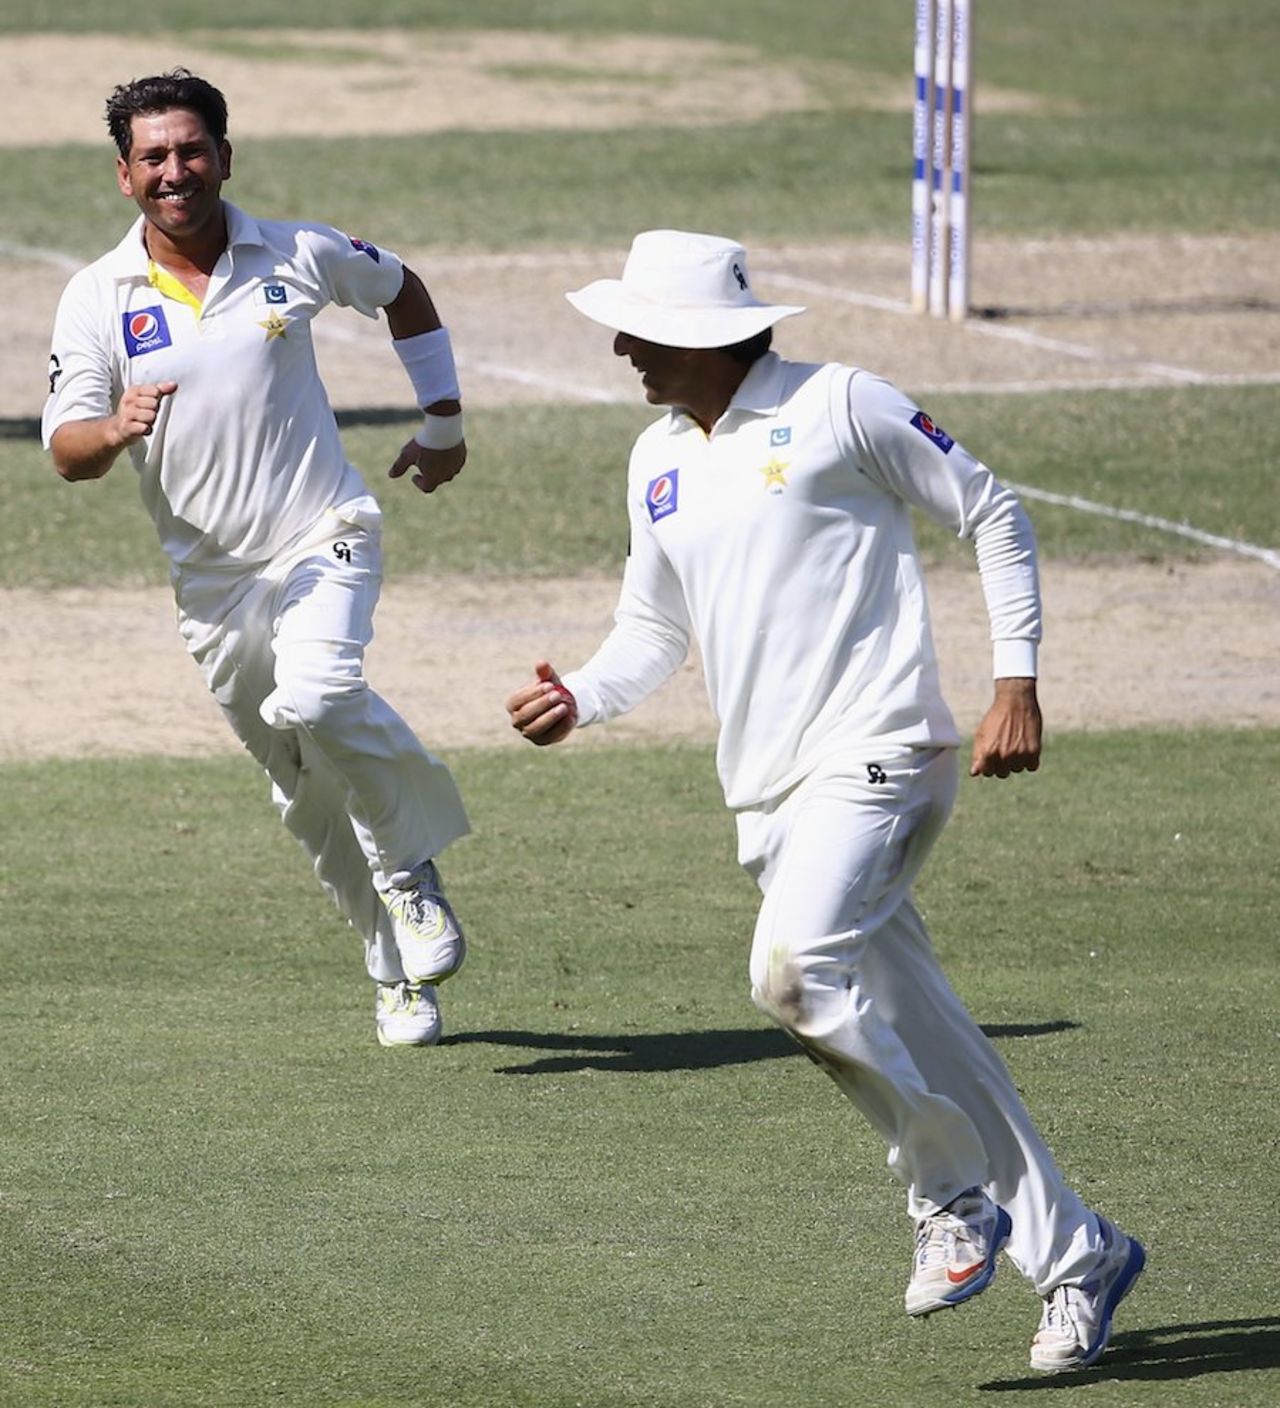 Yasir Shah and Misbah-ul-Haq celebrate a wicket, Pakistan v New Zealand, 2nd Test, Dubai, 2nd day, November 18, 2014